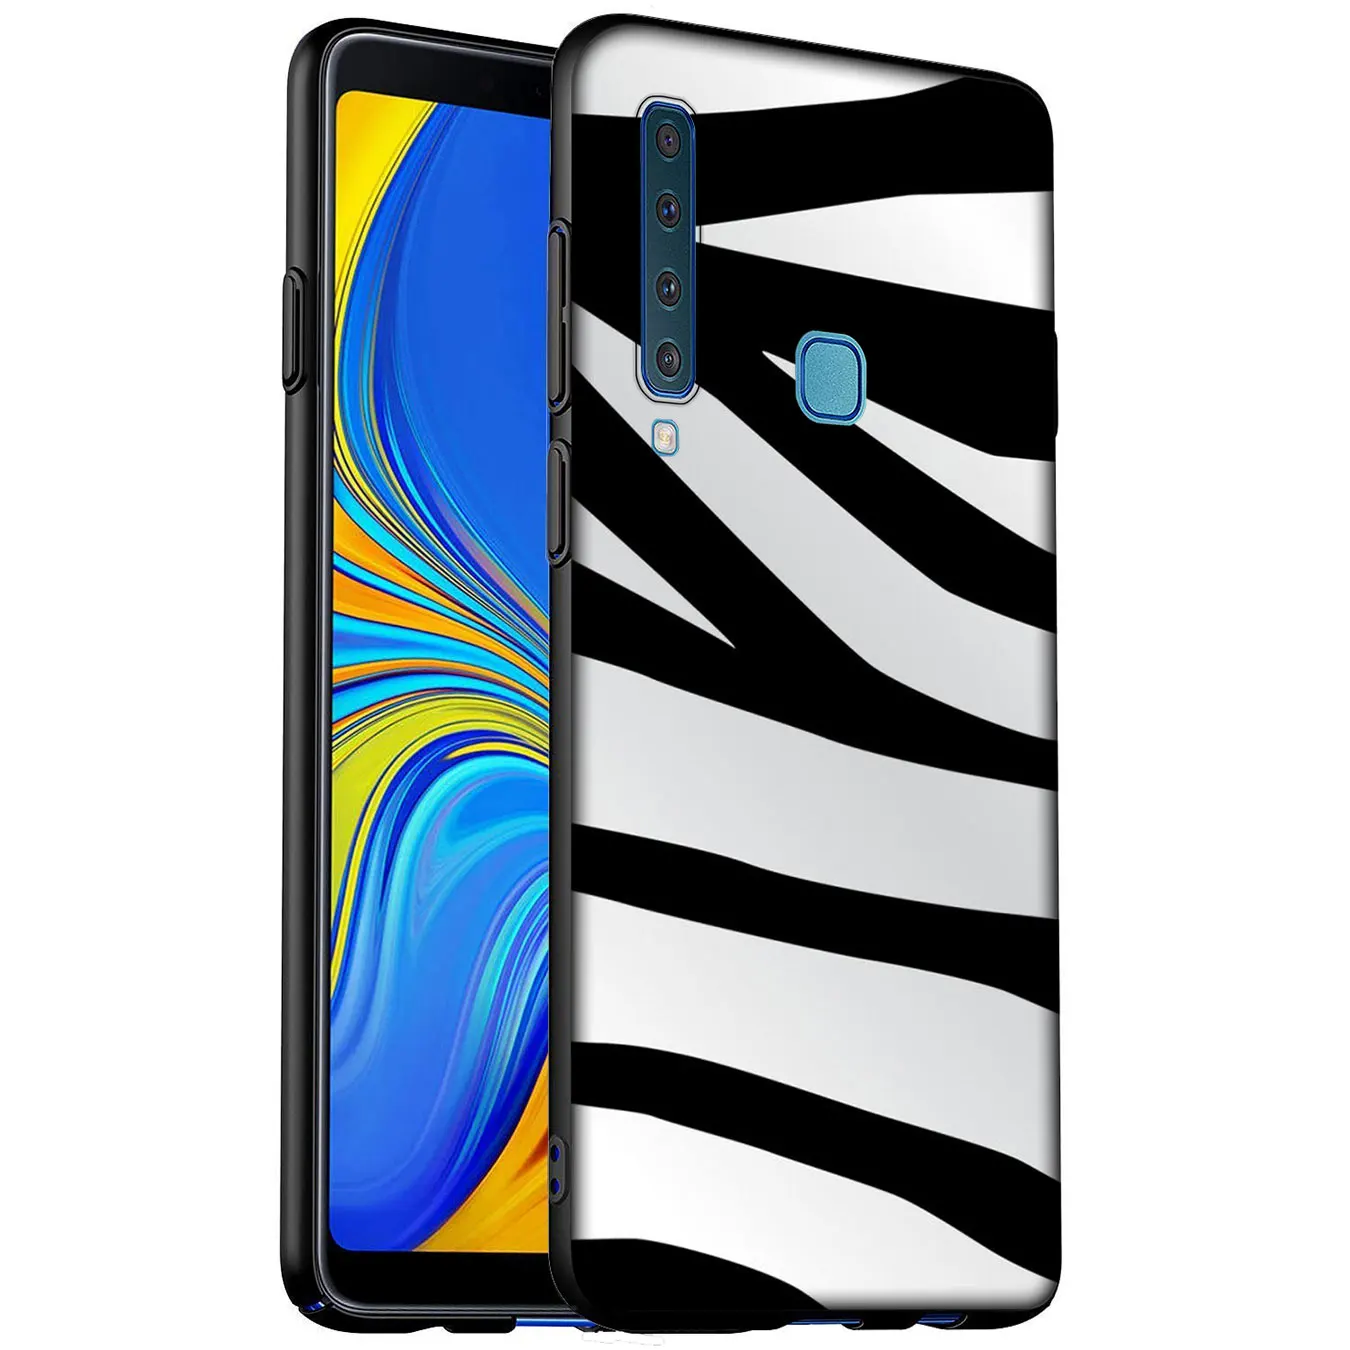 zebra stripe Black and white Pattern Soft Silicone Case for Samsung Galaxy A6 A7 A8 A9 2018 A3 A5 2016 2017 Note 9 8 10 Plus |